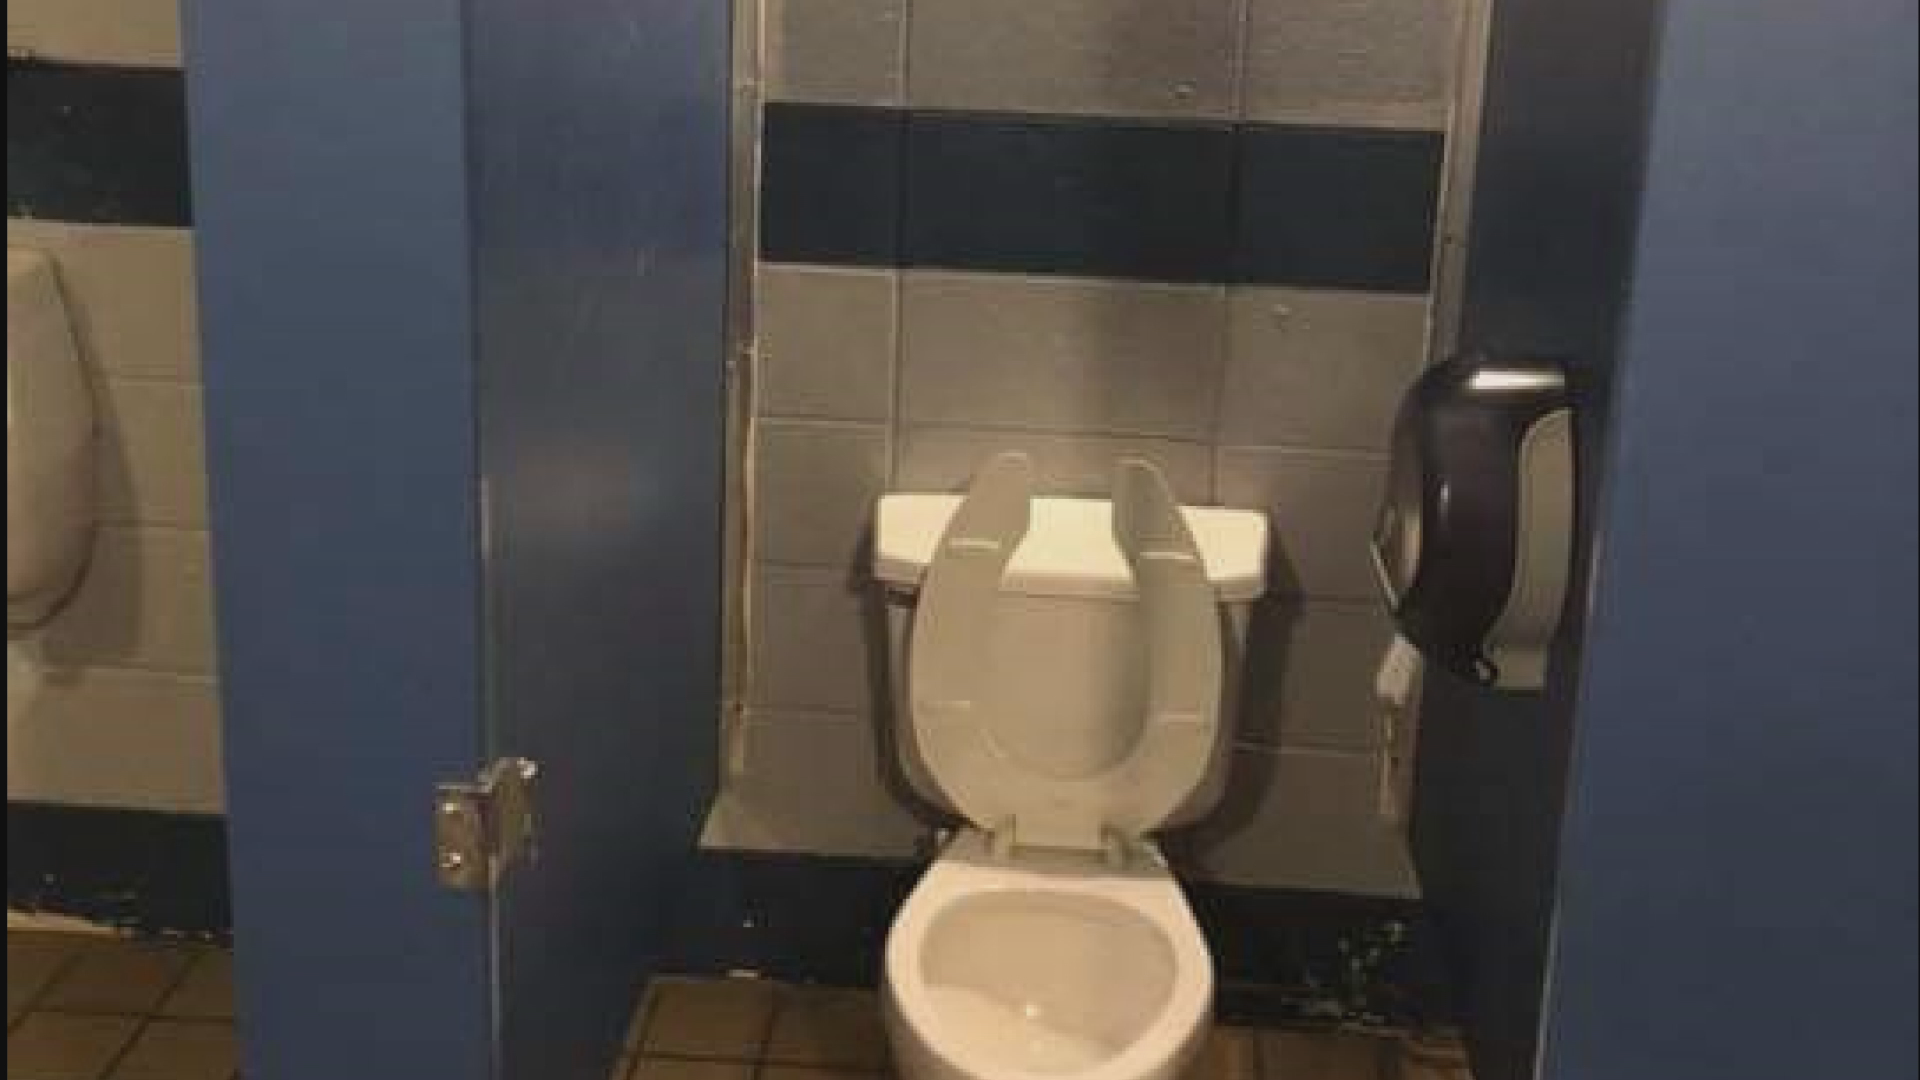 guy on toilet stall